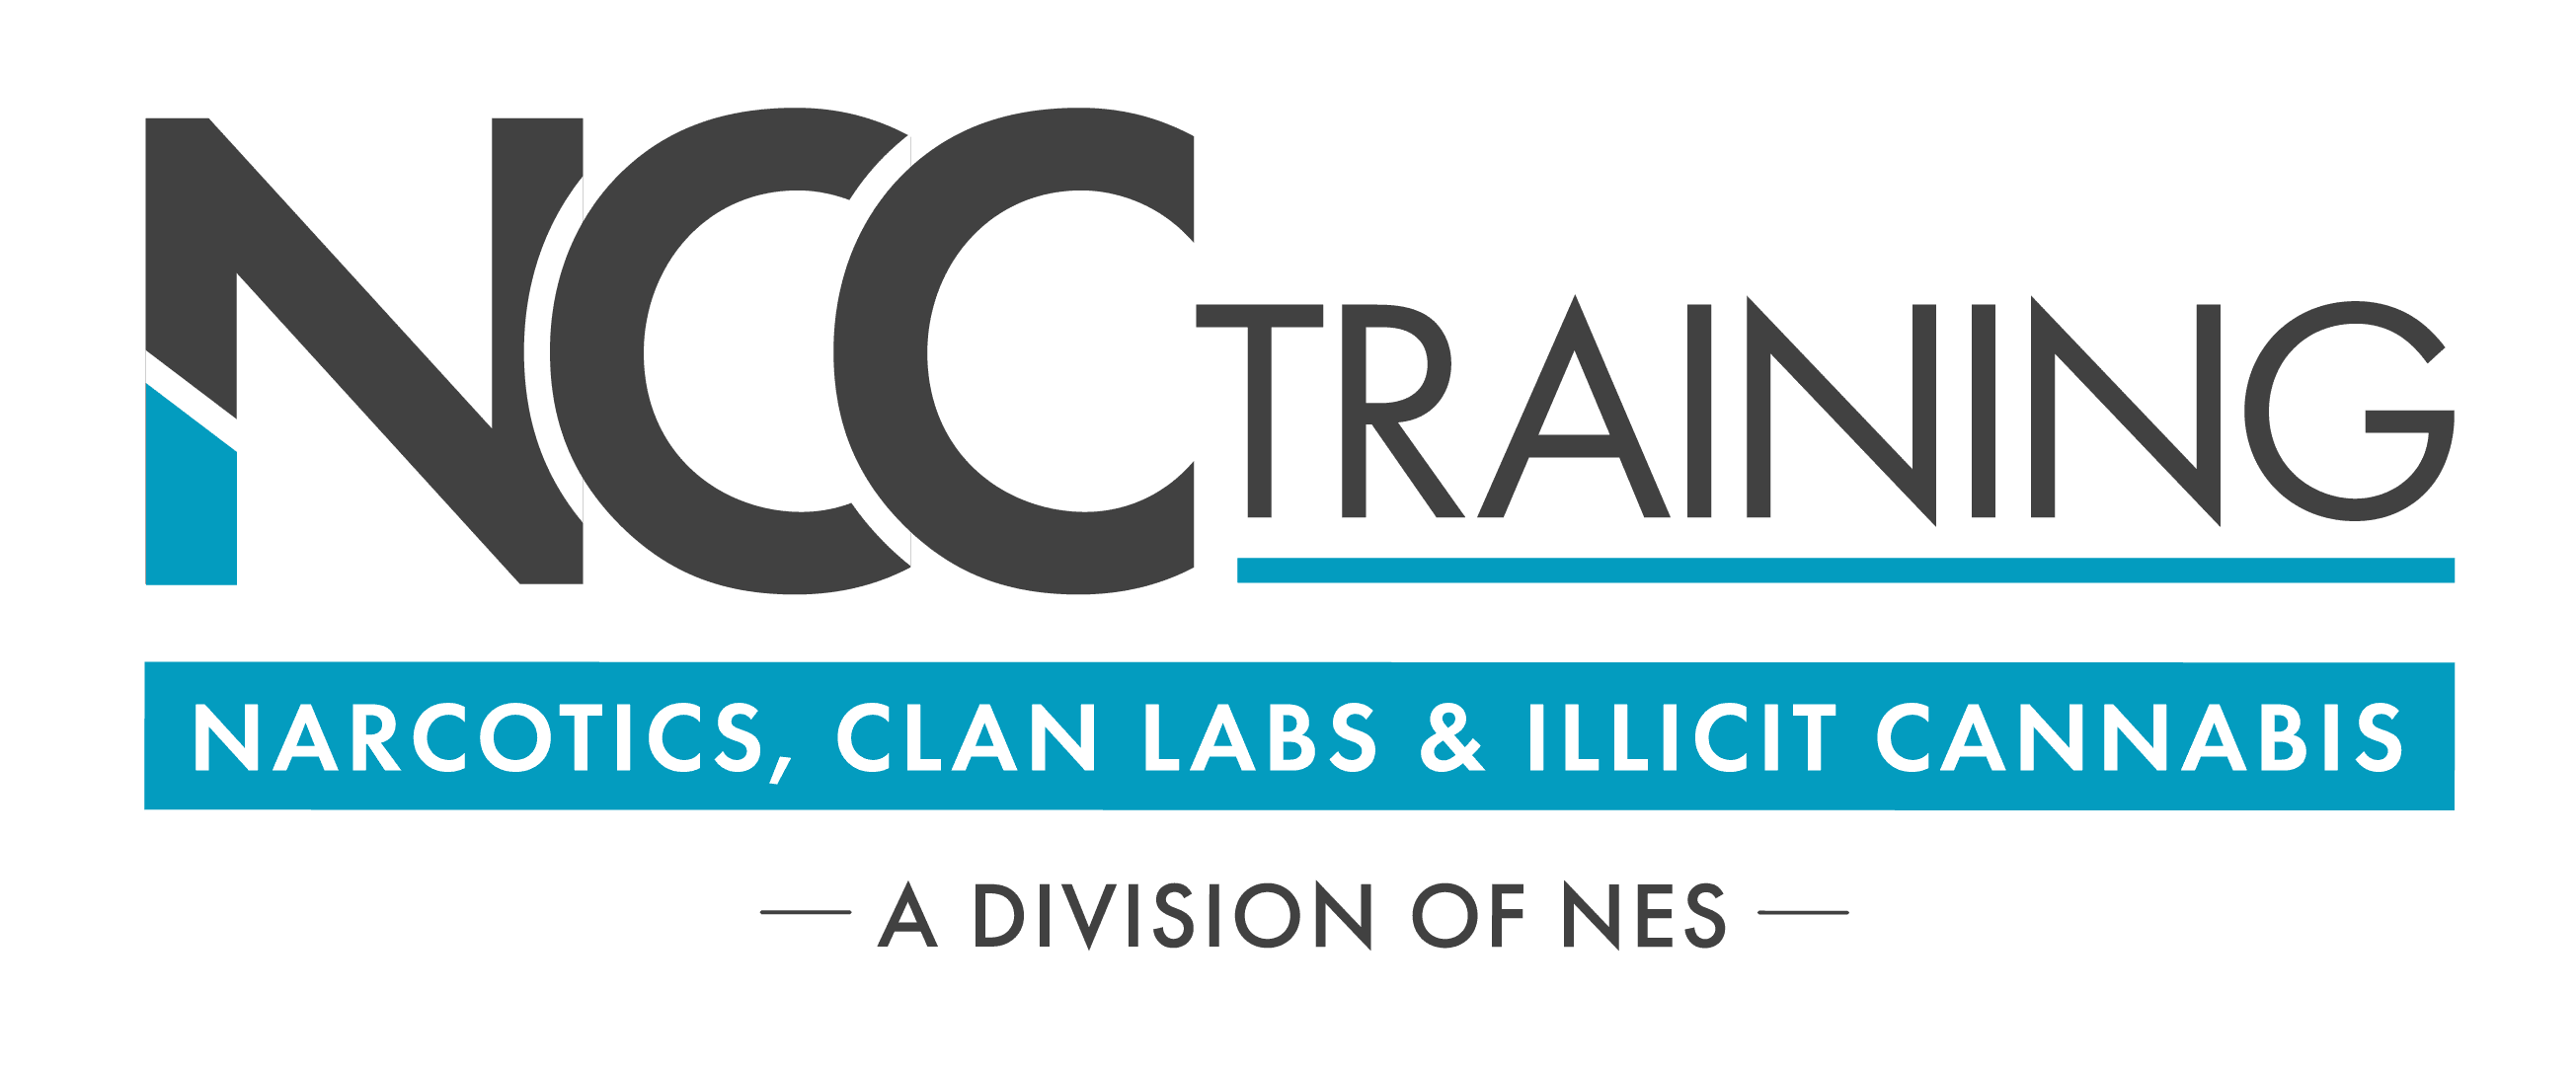 NCC training logo